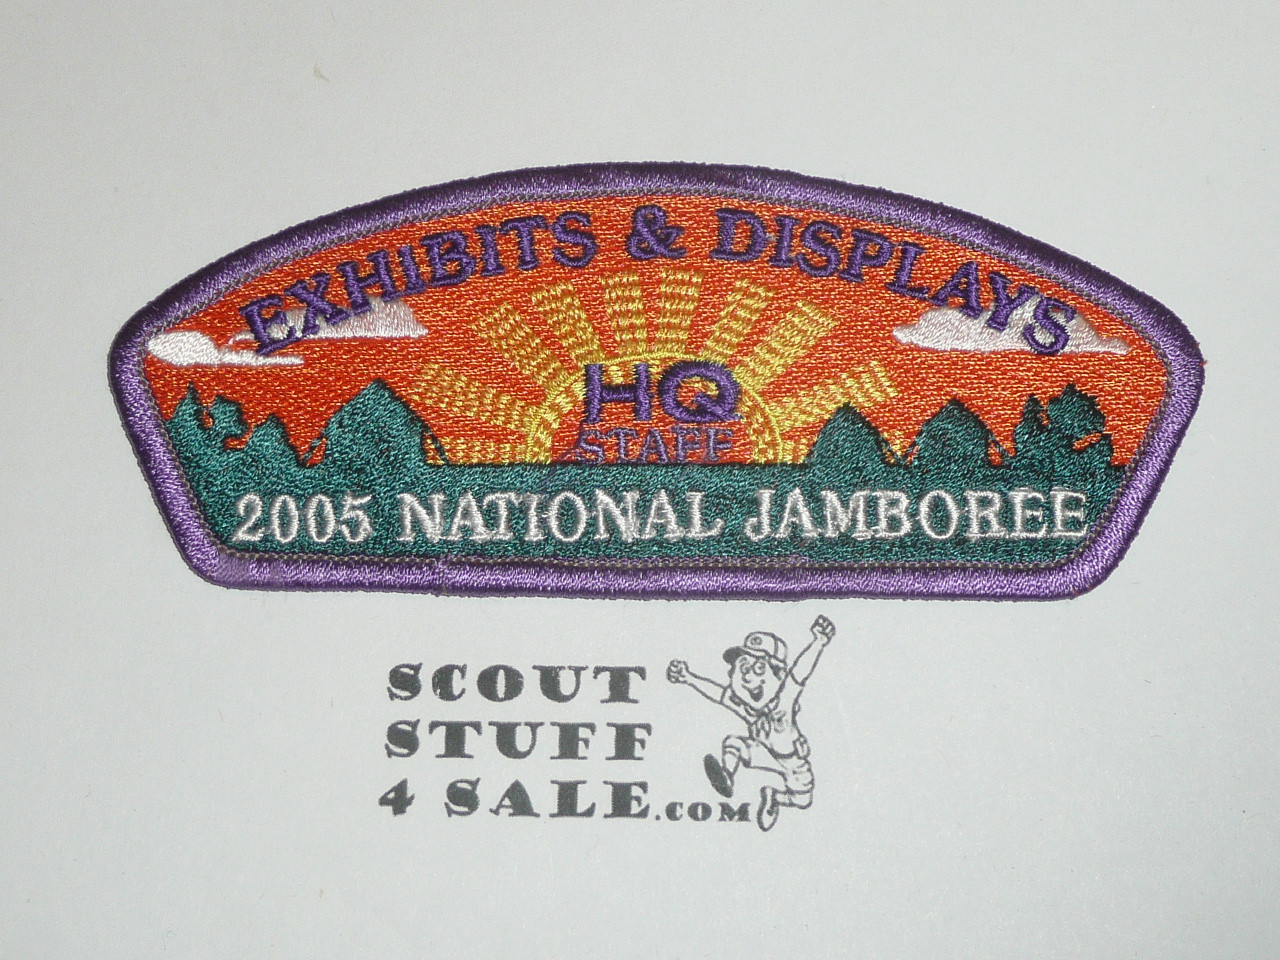 2005 National Jamboree JSP - Exhibits & Displays HQ Staff